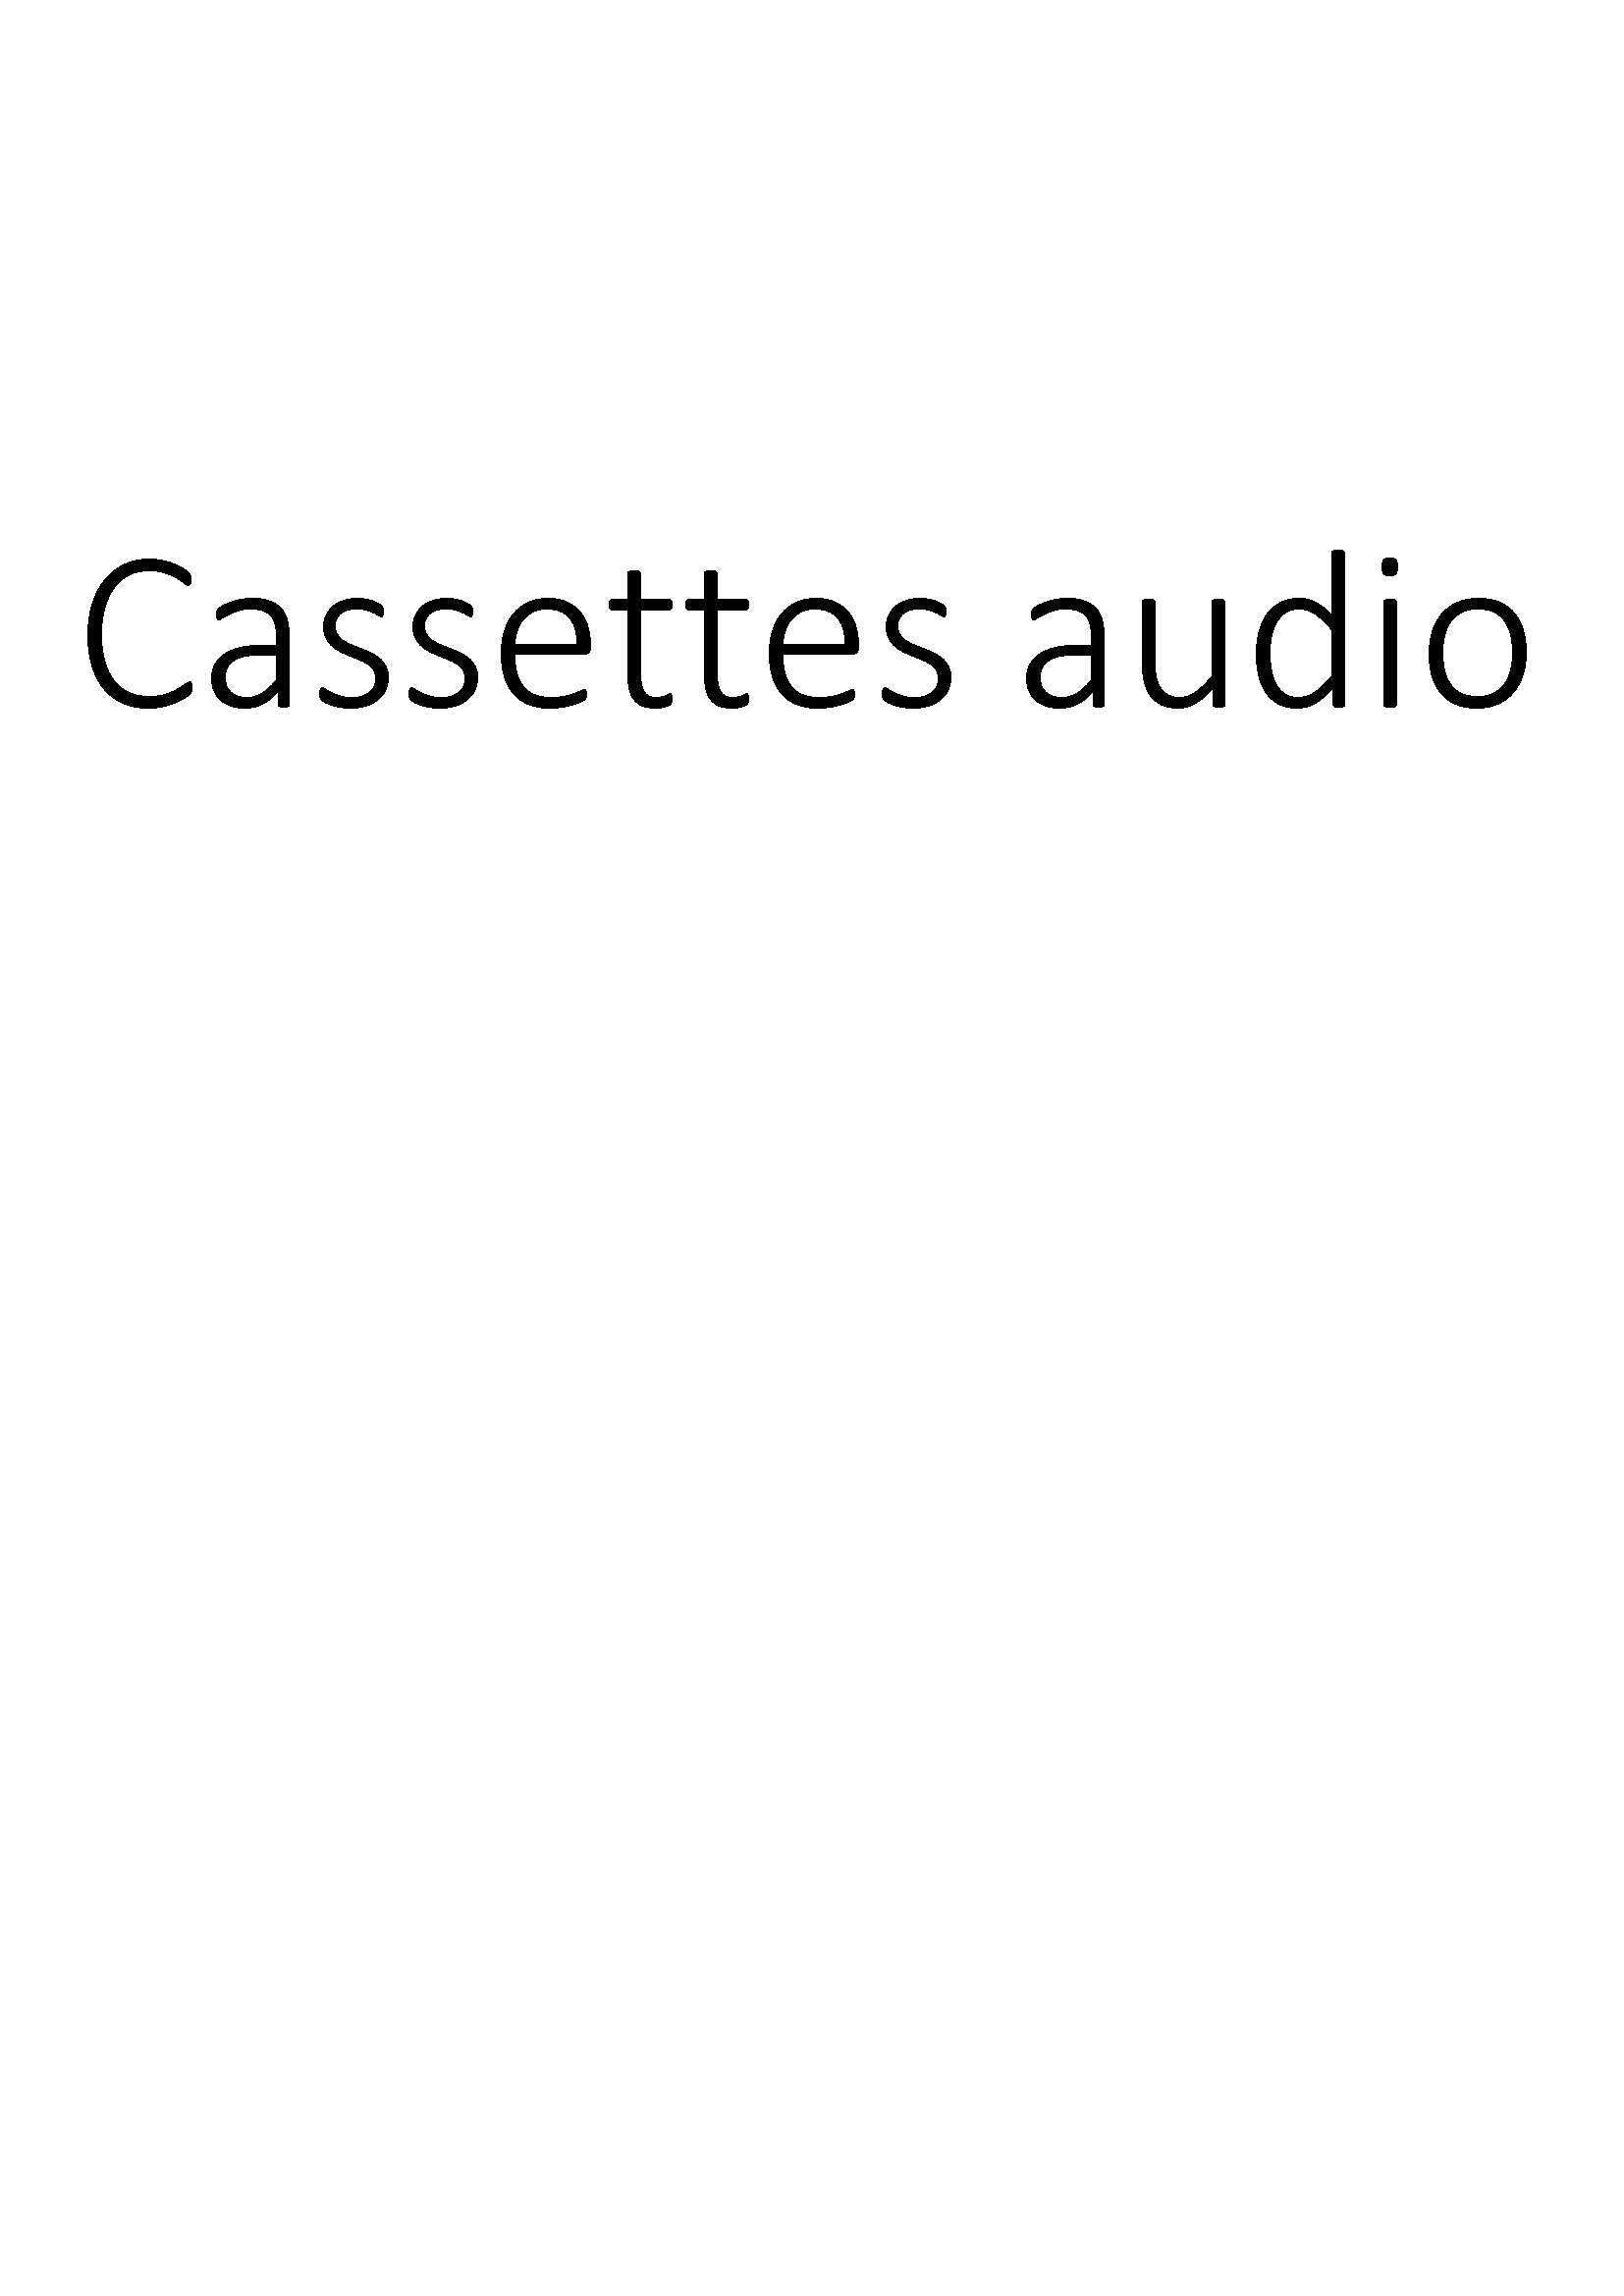 Cassettes audio clicktofournisseur.com